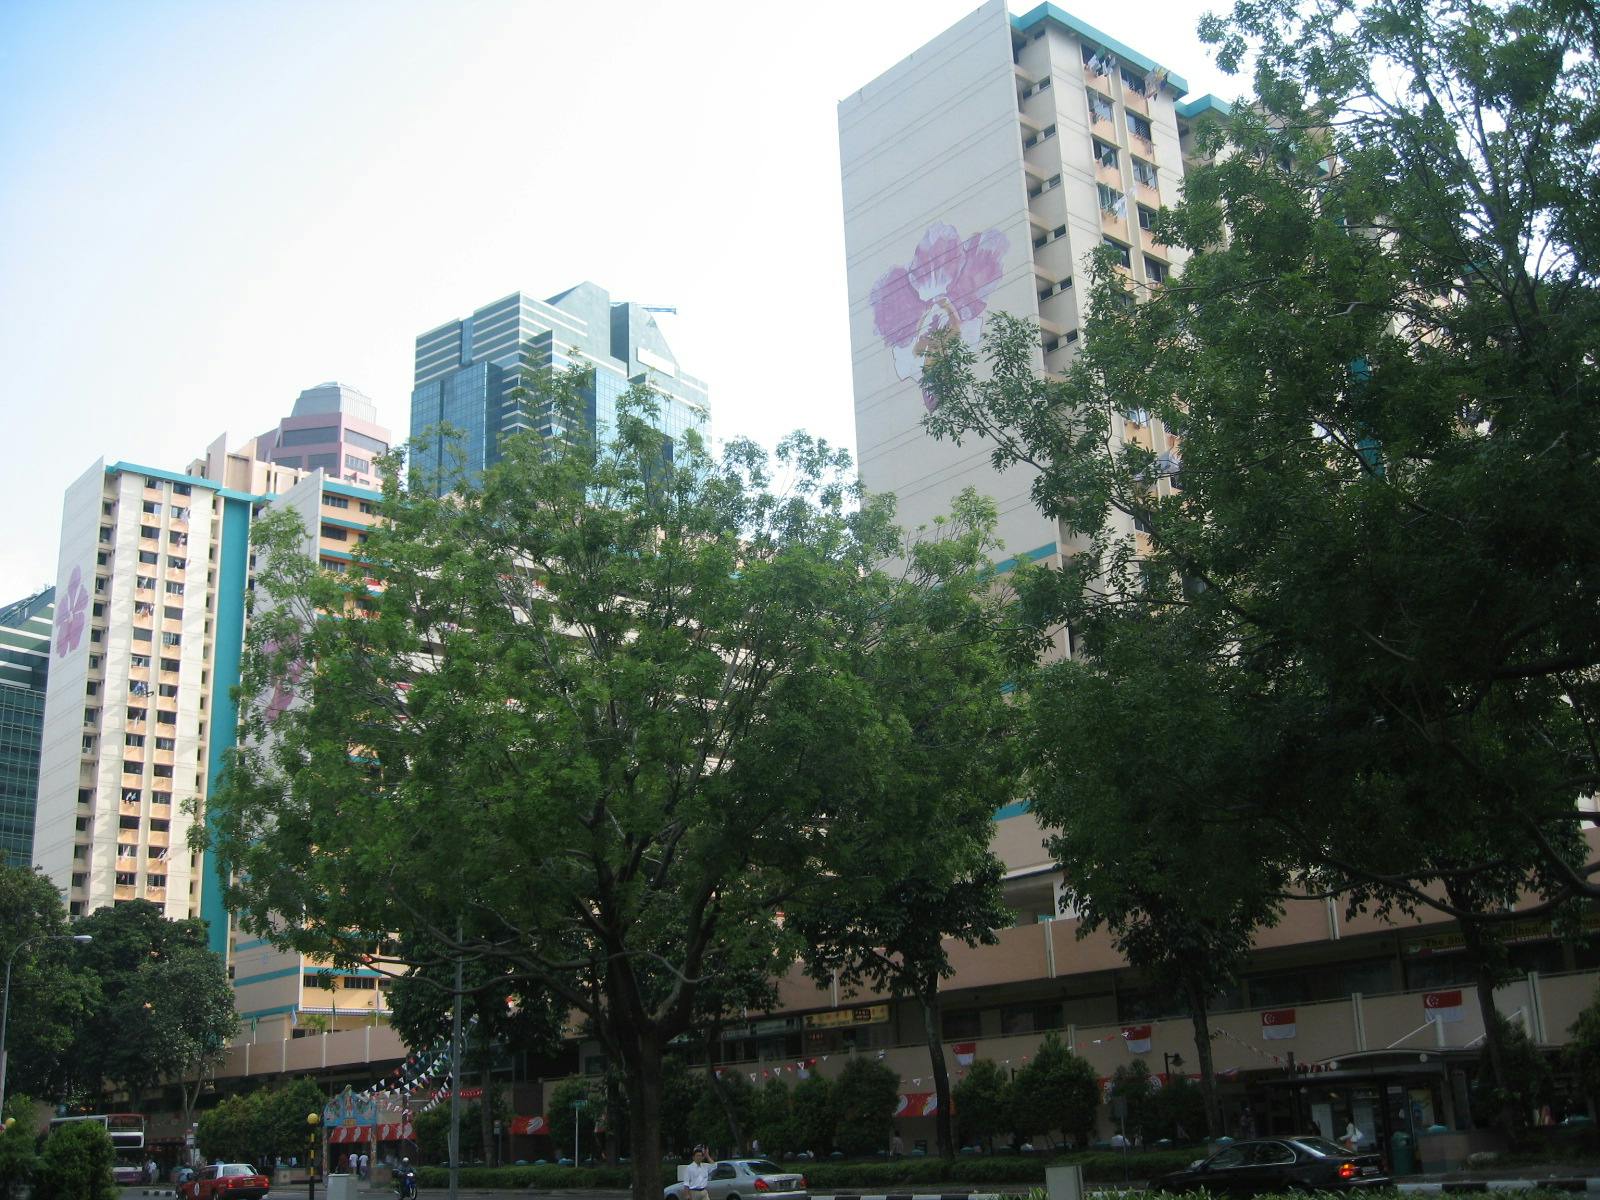 Tanjong Pagar Plaza